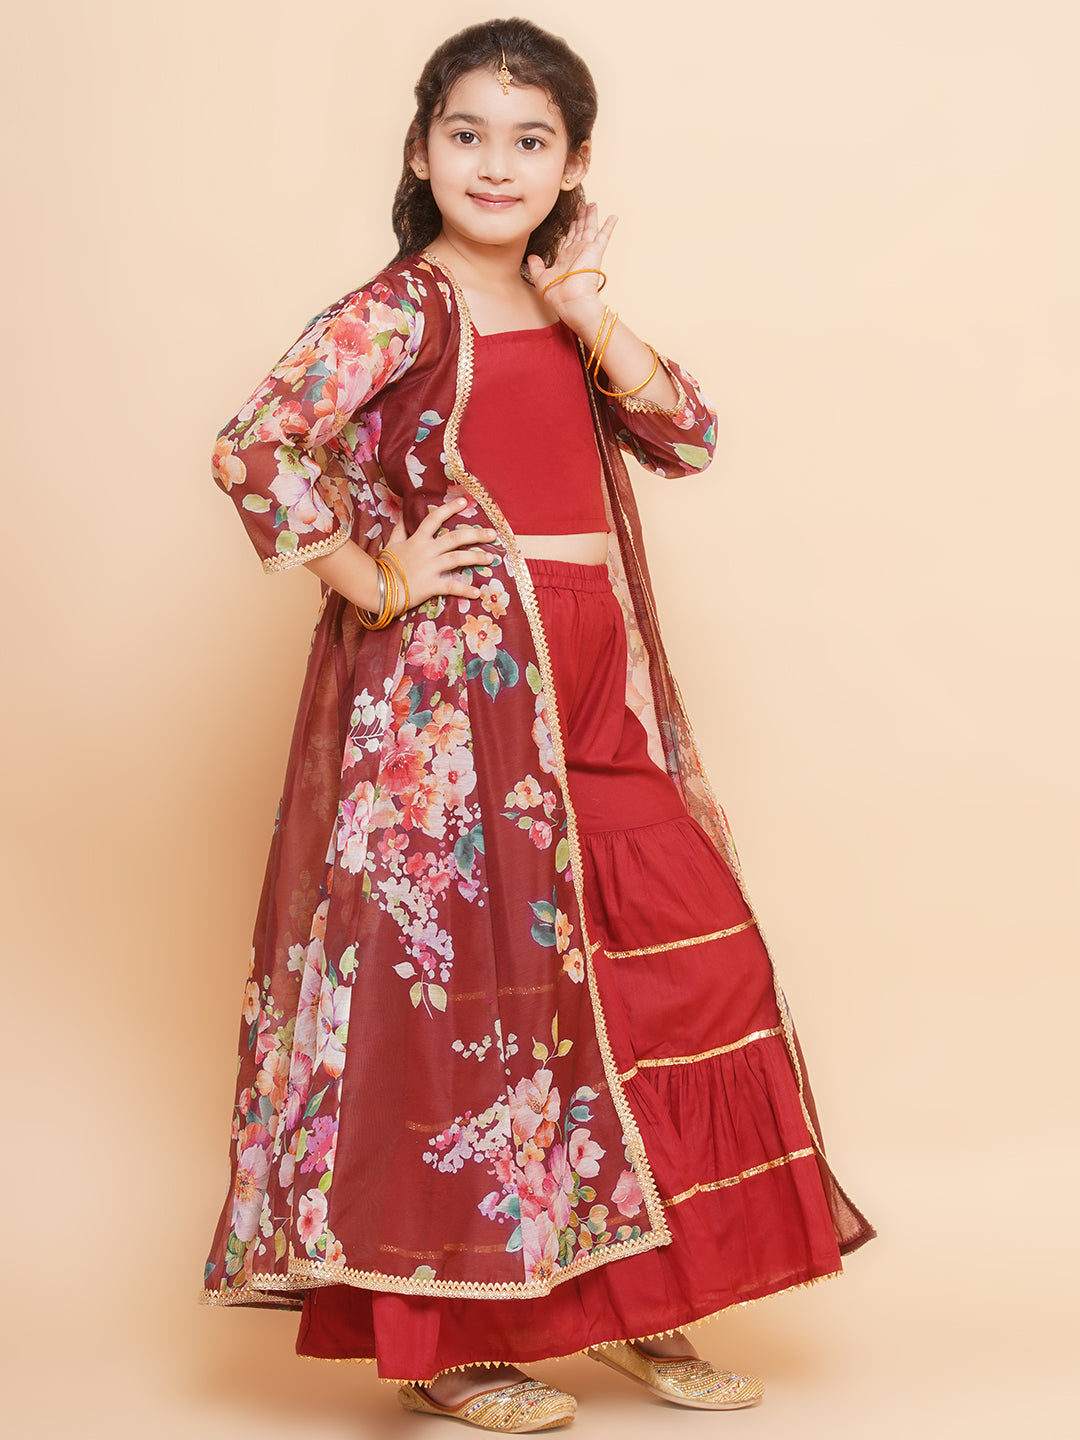 Girls Maroon Cami Saharara with Floral printed shrug